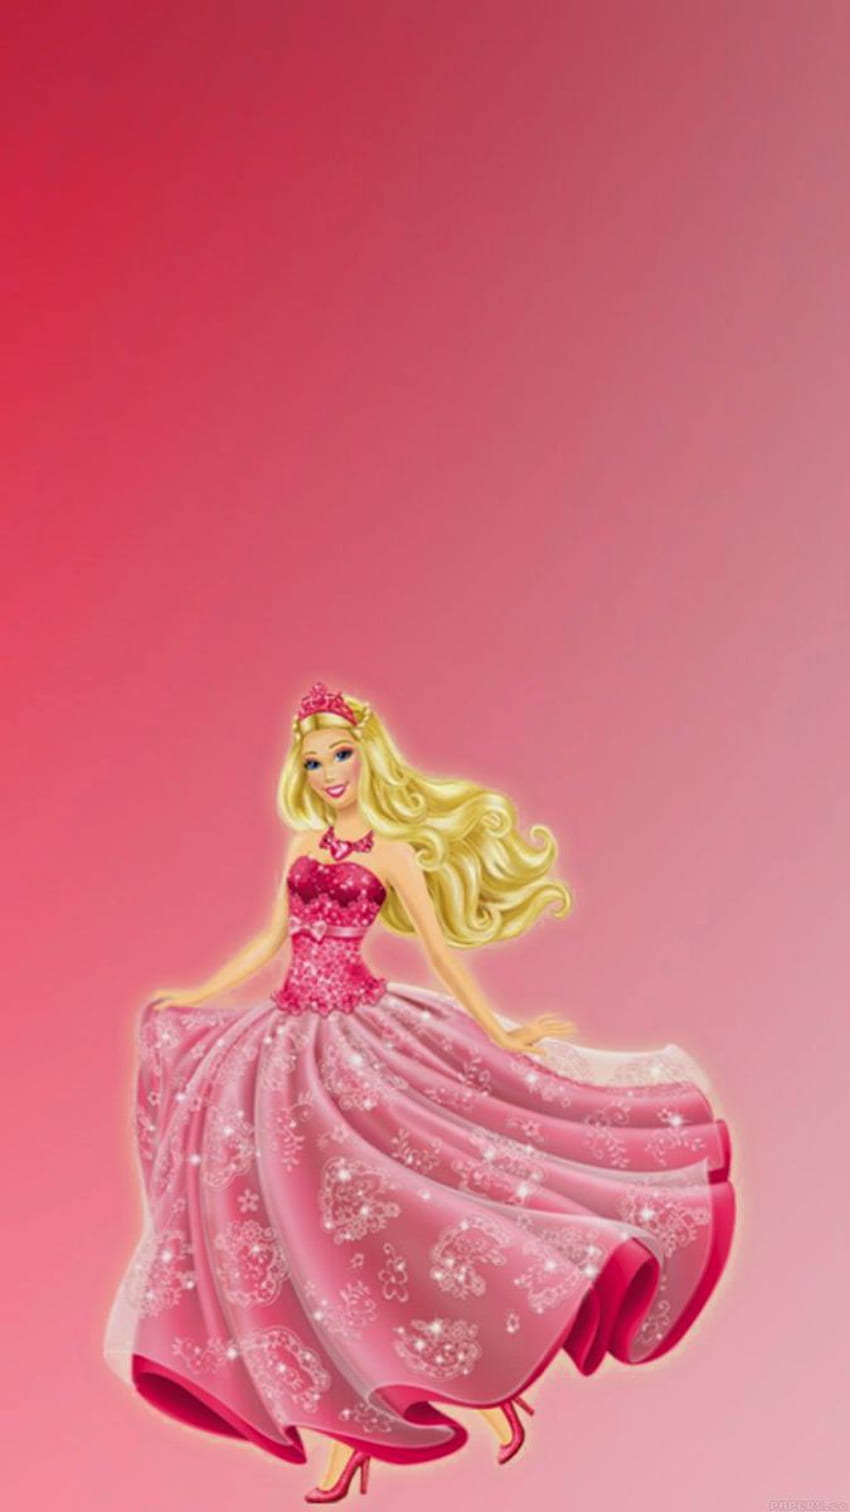 Barbie Princess  Pink Dress Wallpaper Download  MobCup